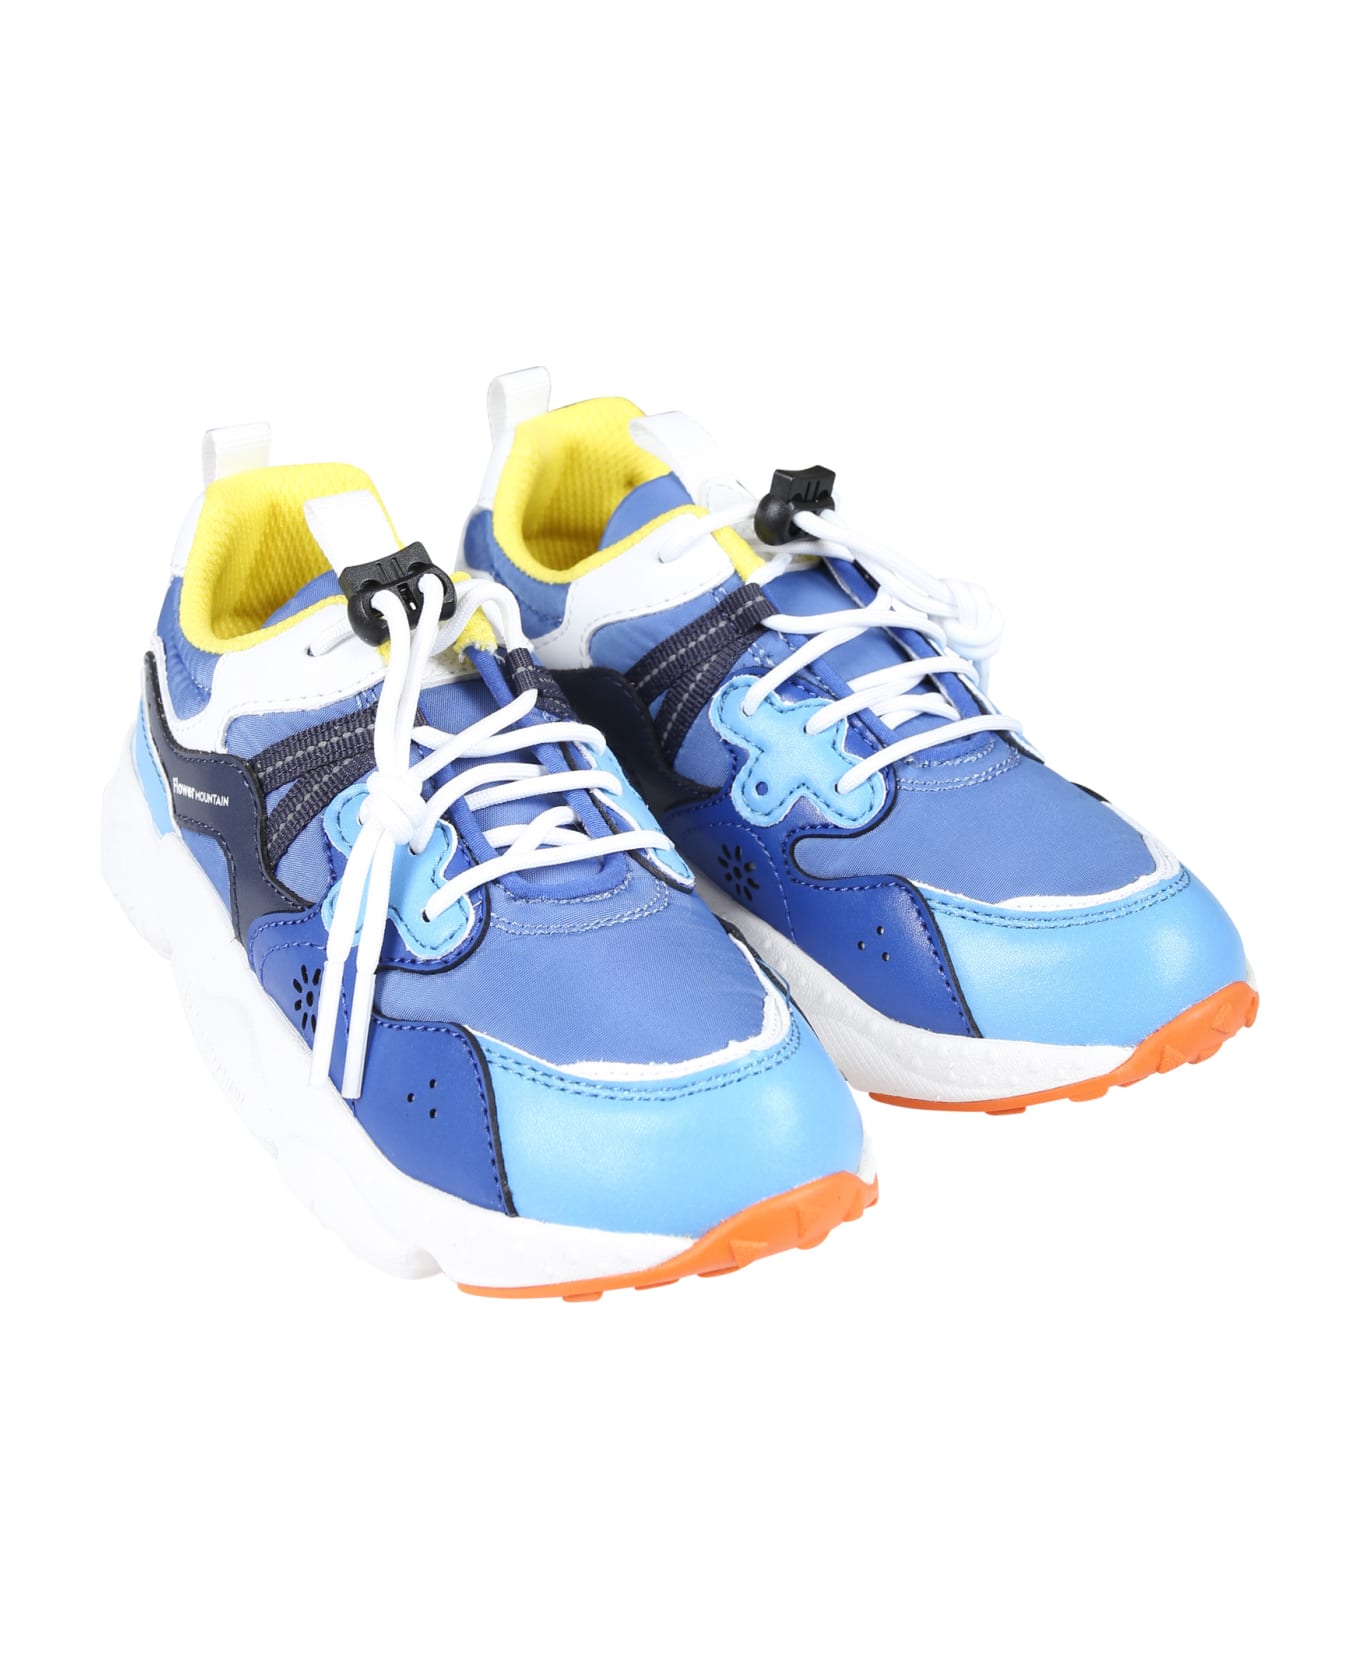 Flower Mountain Light Blue Low Yamano Sneakers For Boy - Light Blue